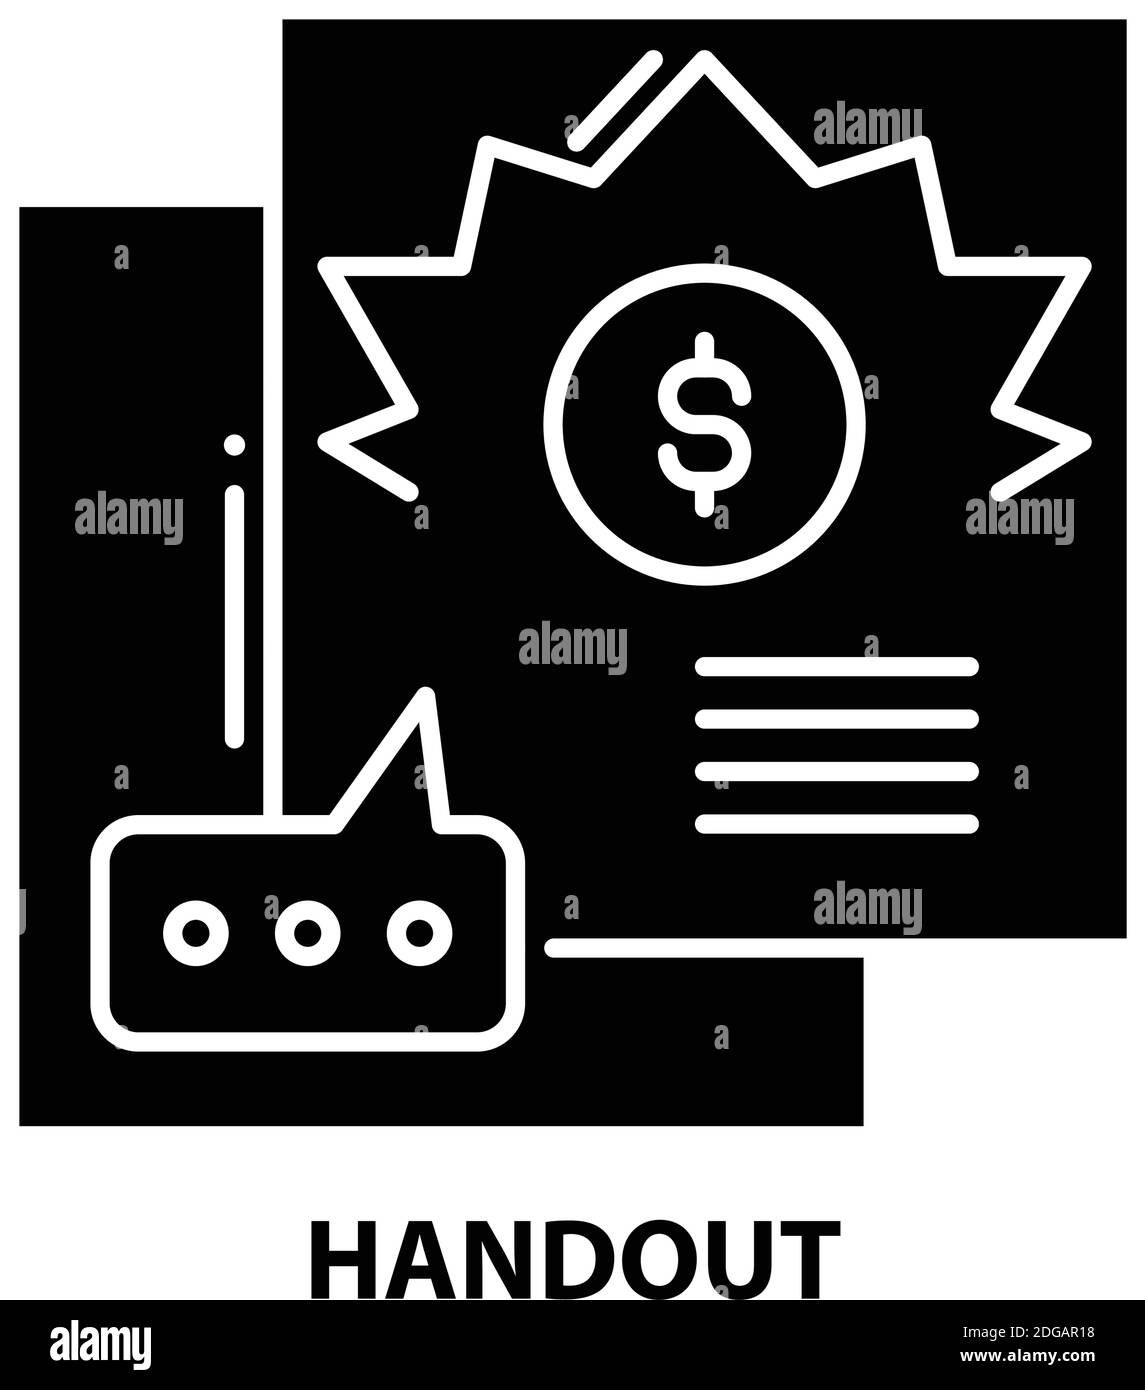 handout icon, black vector sign with editable strokes, concept illustration Stock Vector